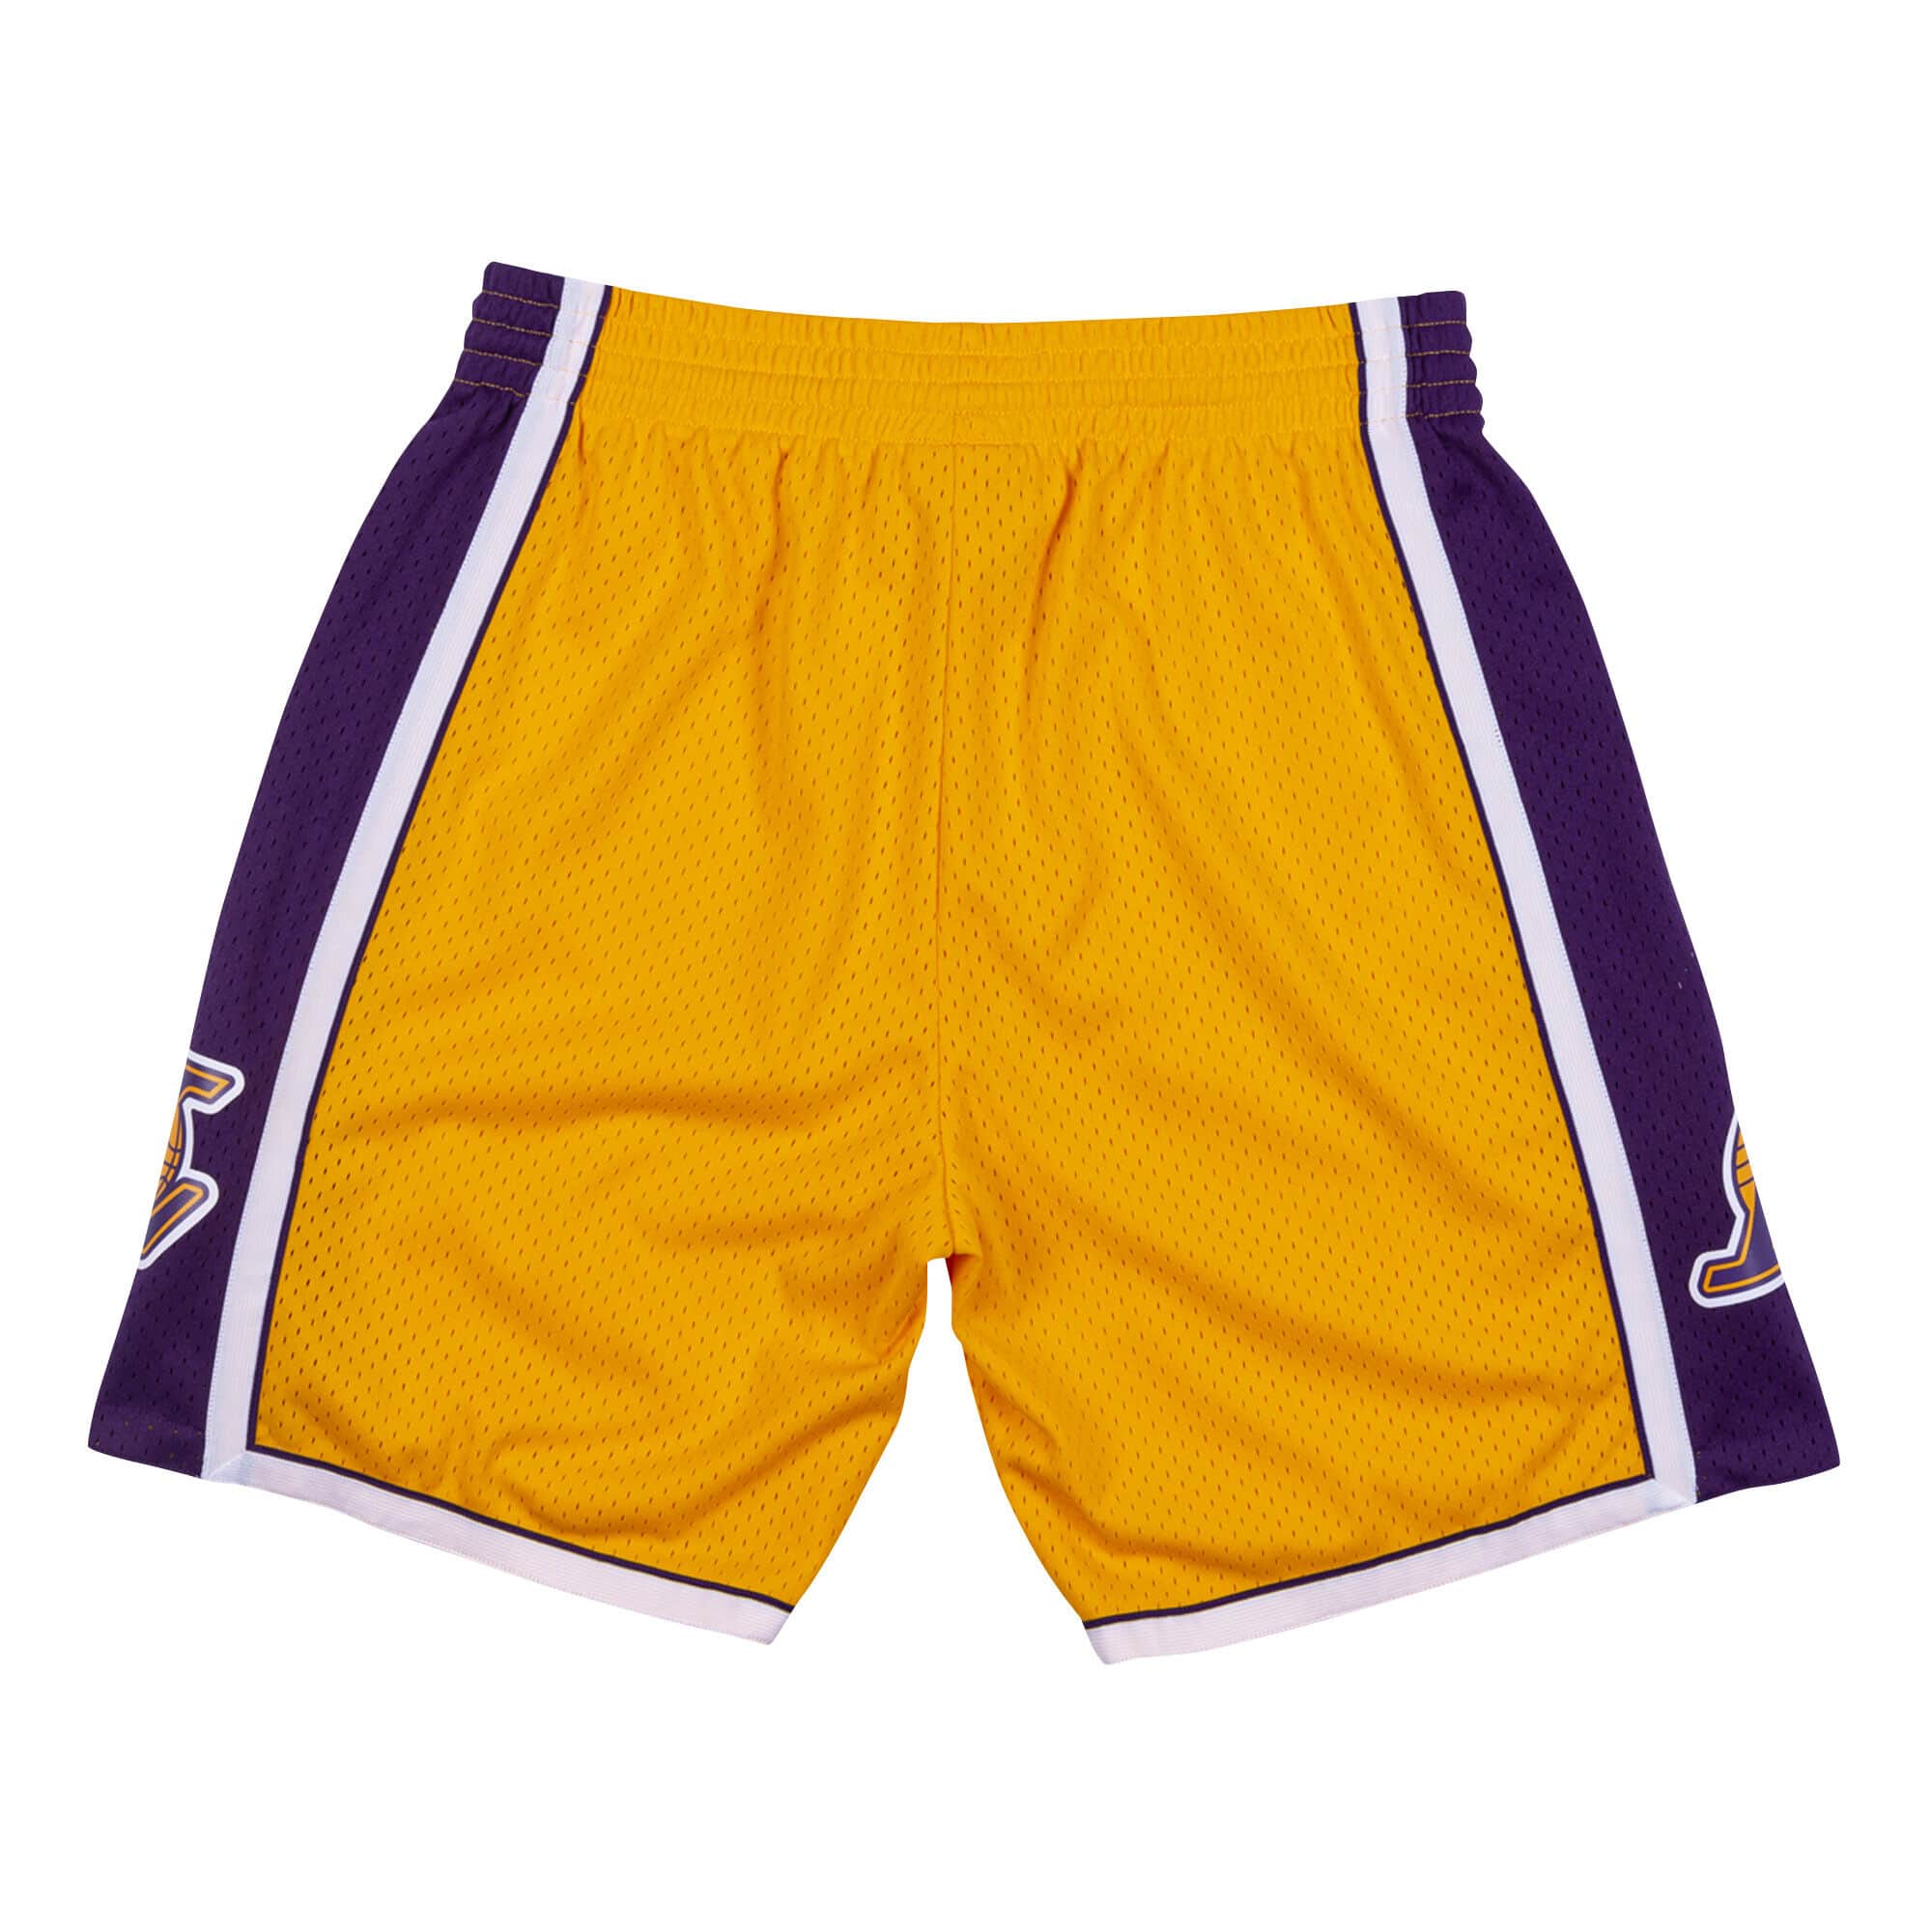 Los Angeles Lakers 2009 -10 Mitchell & Ness Swingman Shorts